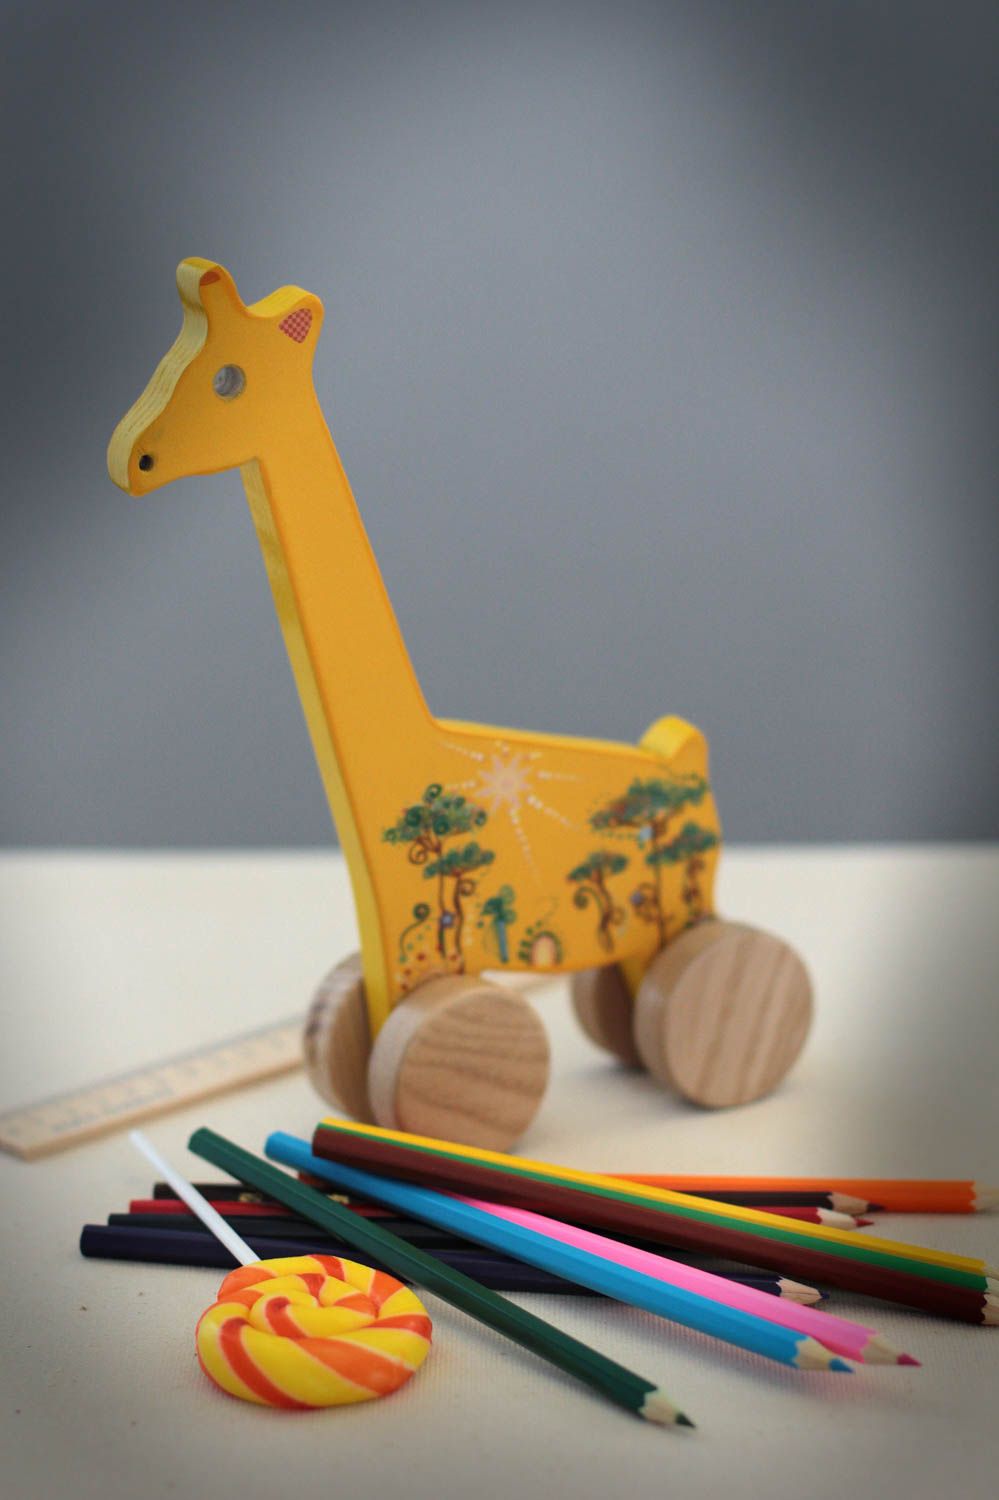 Juguete artesanal jirafa amarilla juguete de madera regalo para niño con ruedas foto 1